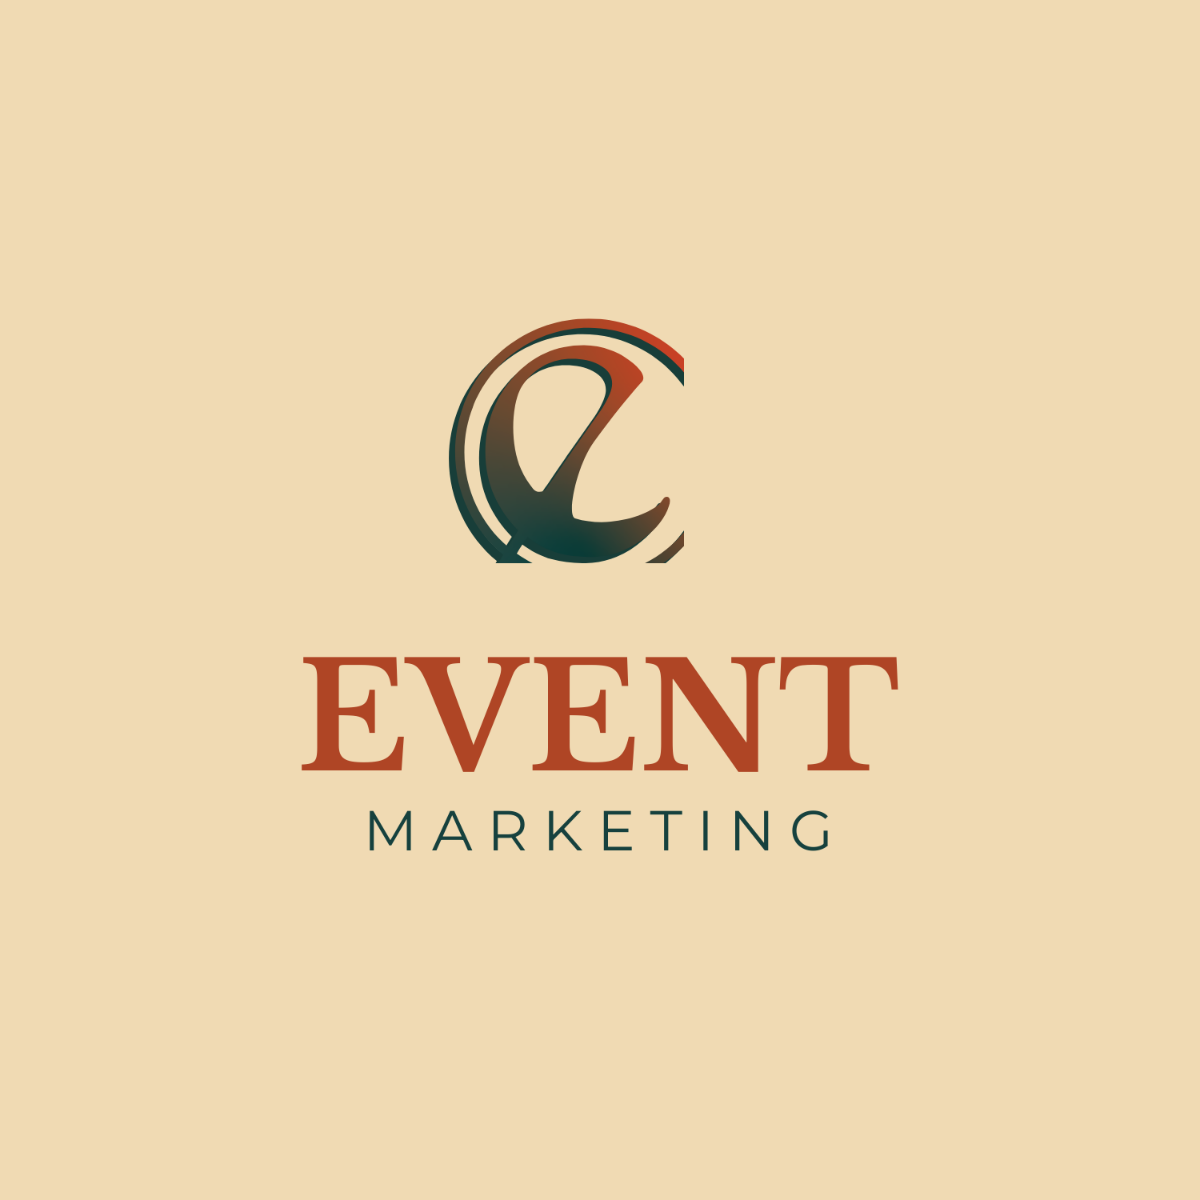 Event Marketing Logo Template